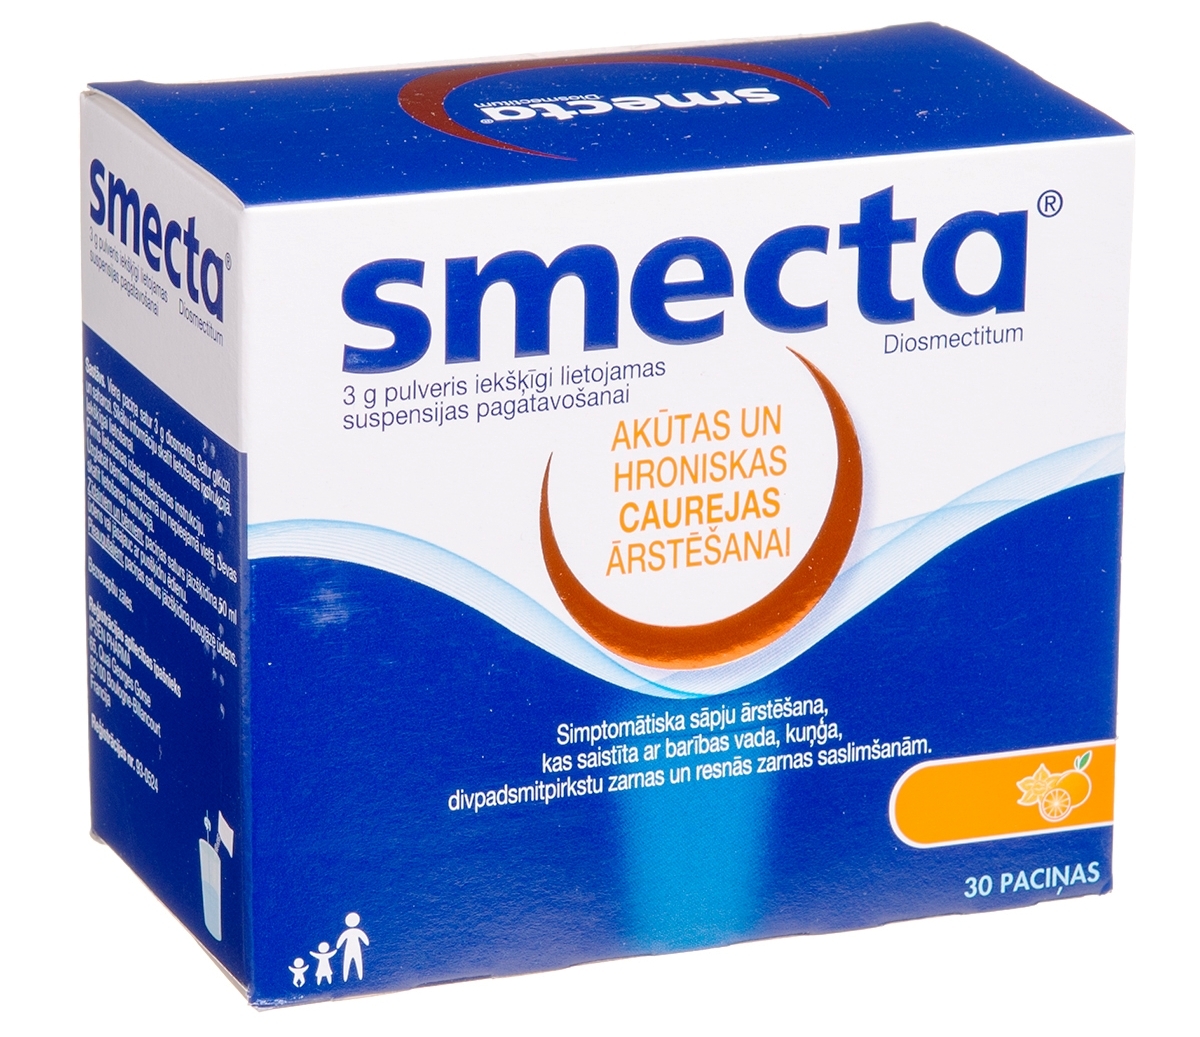 SMECTA Powder - European OTC medicines and devices